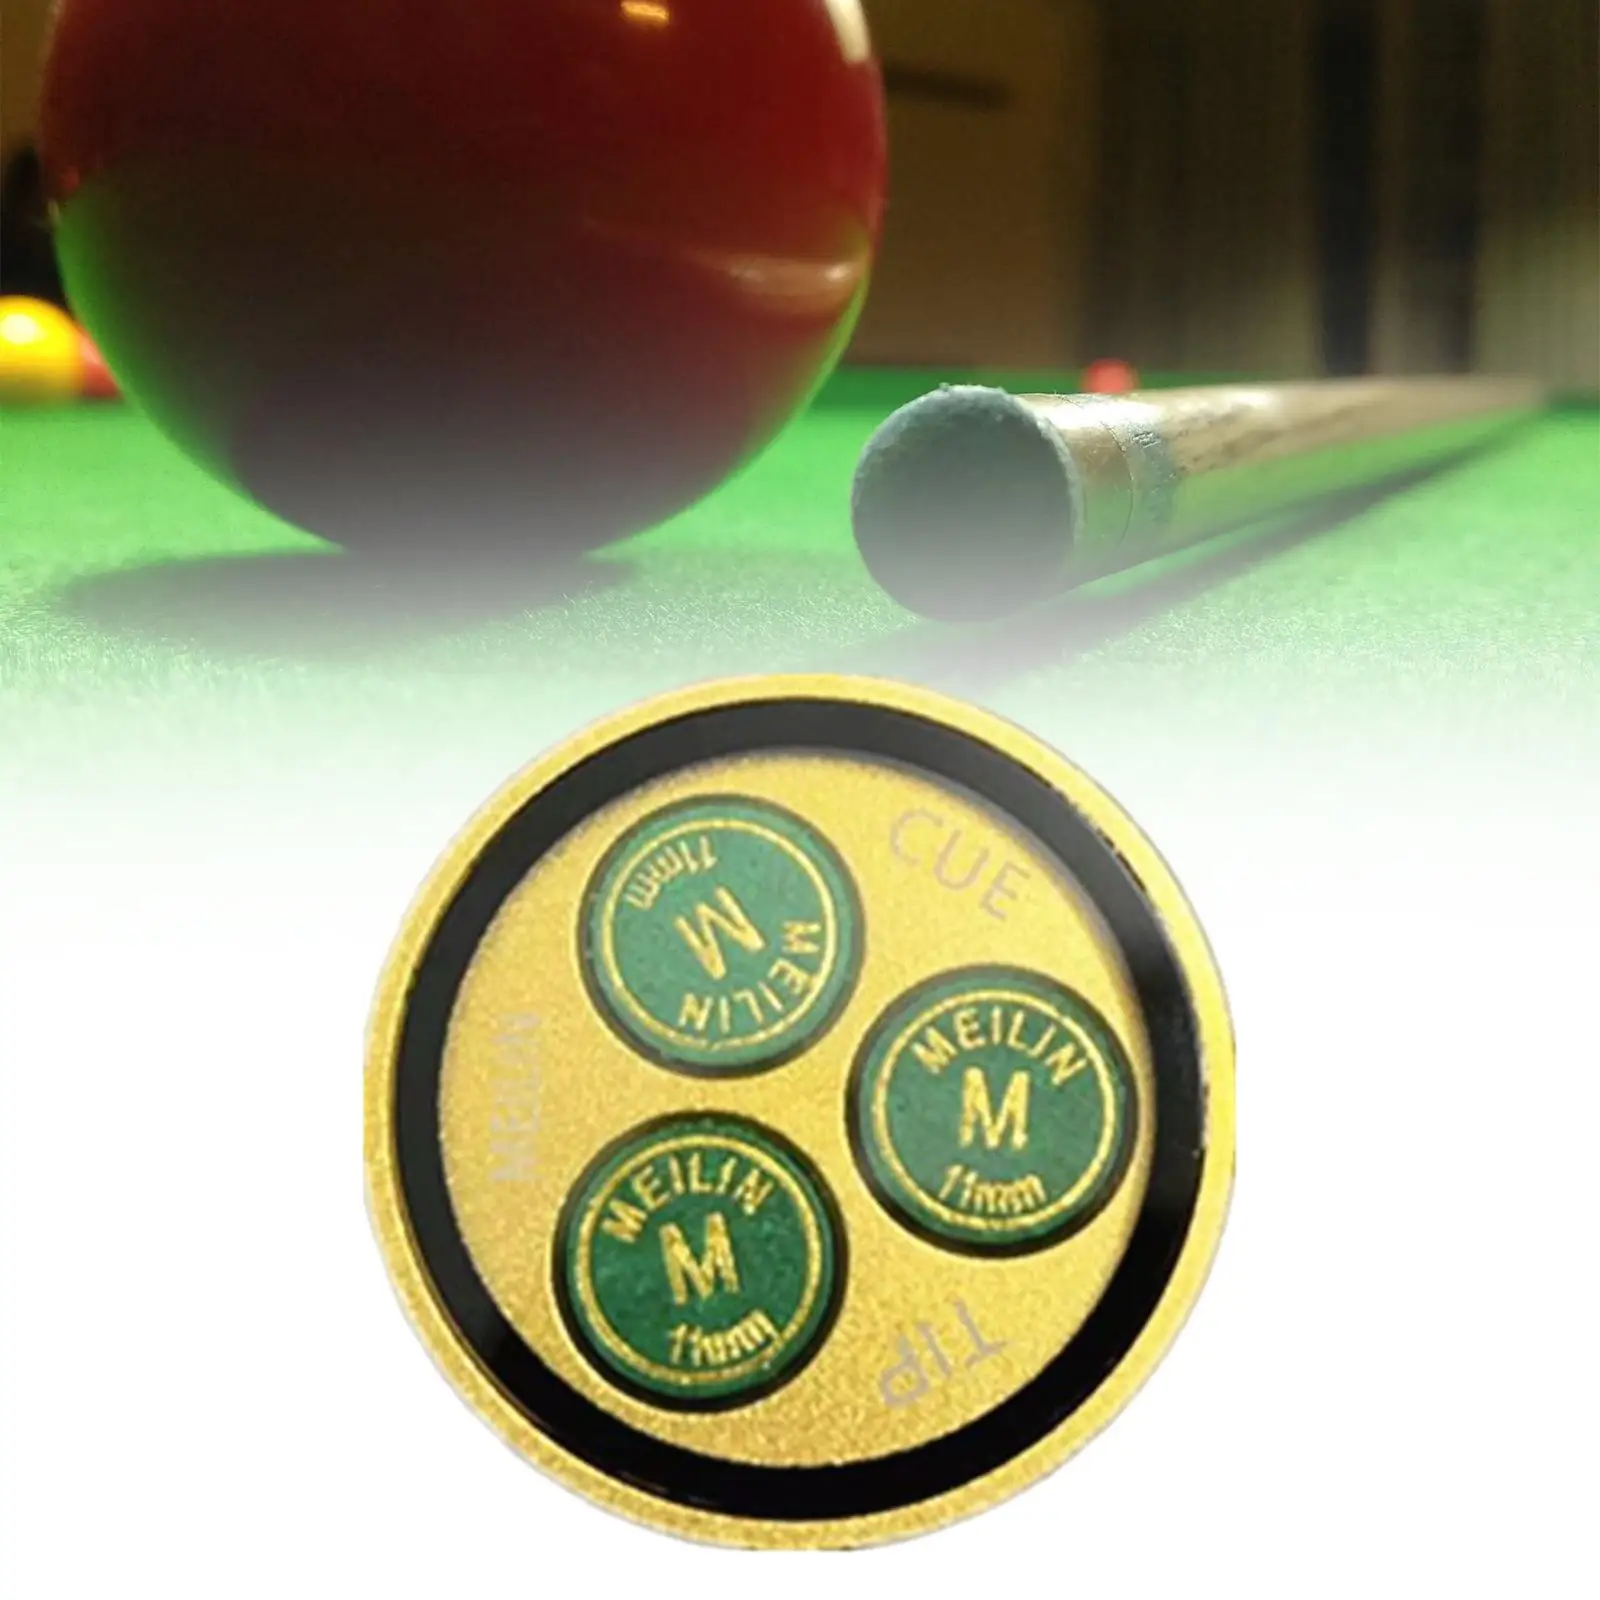 Pool Cue Tips Repairing Billiards Lovers Gift Wear Resistant Play Lightweight Indoor Game Practicing Spare Pars Snooker Cue Tips